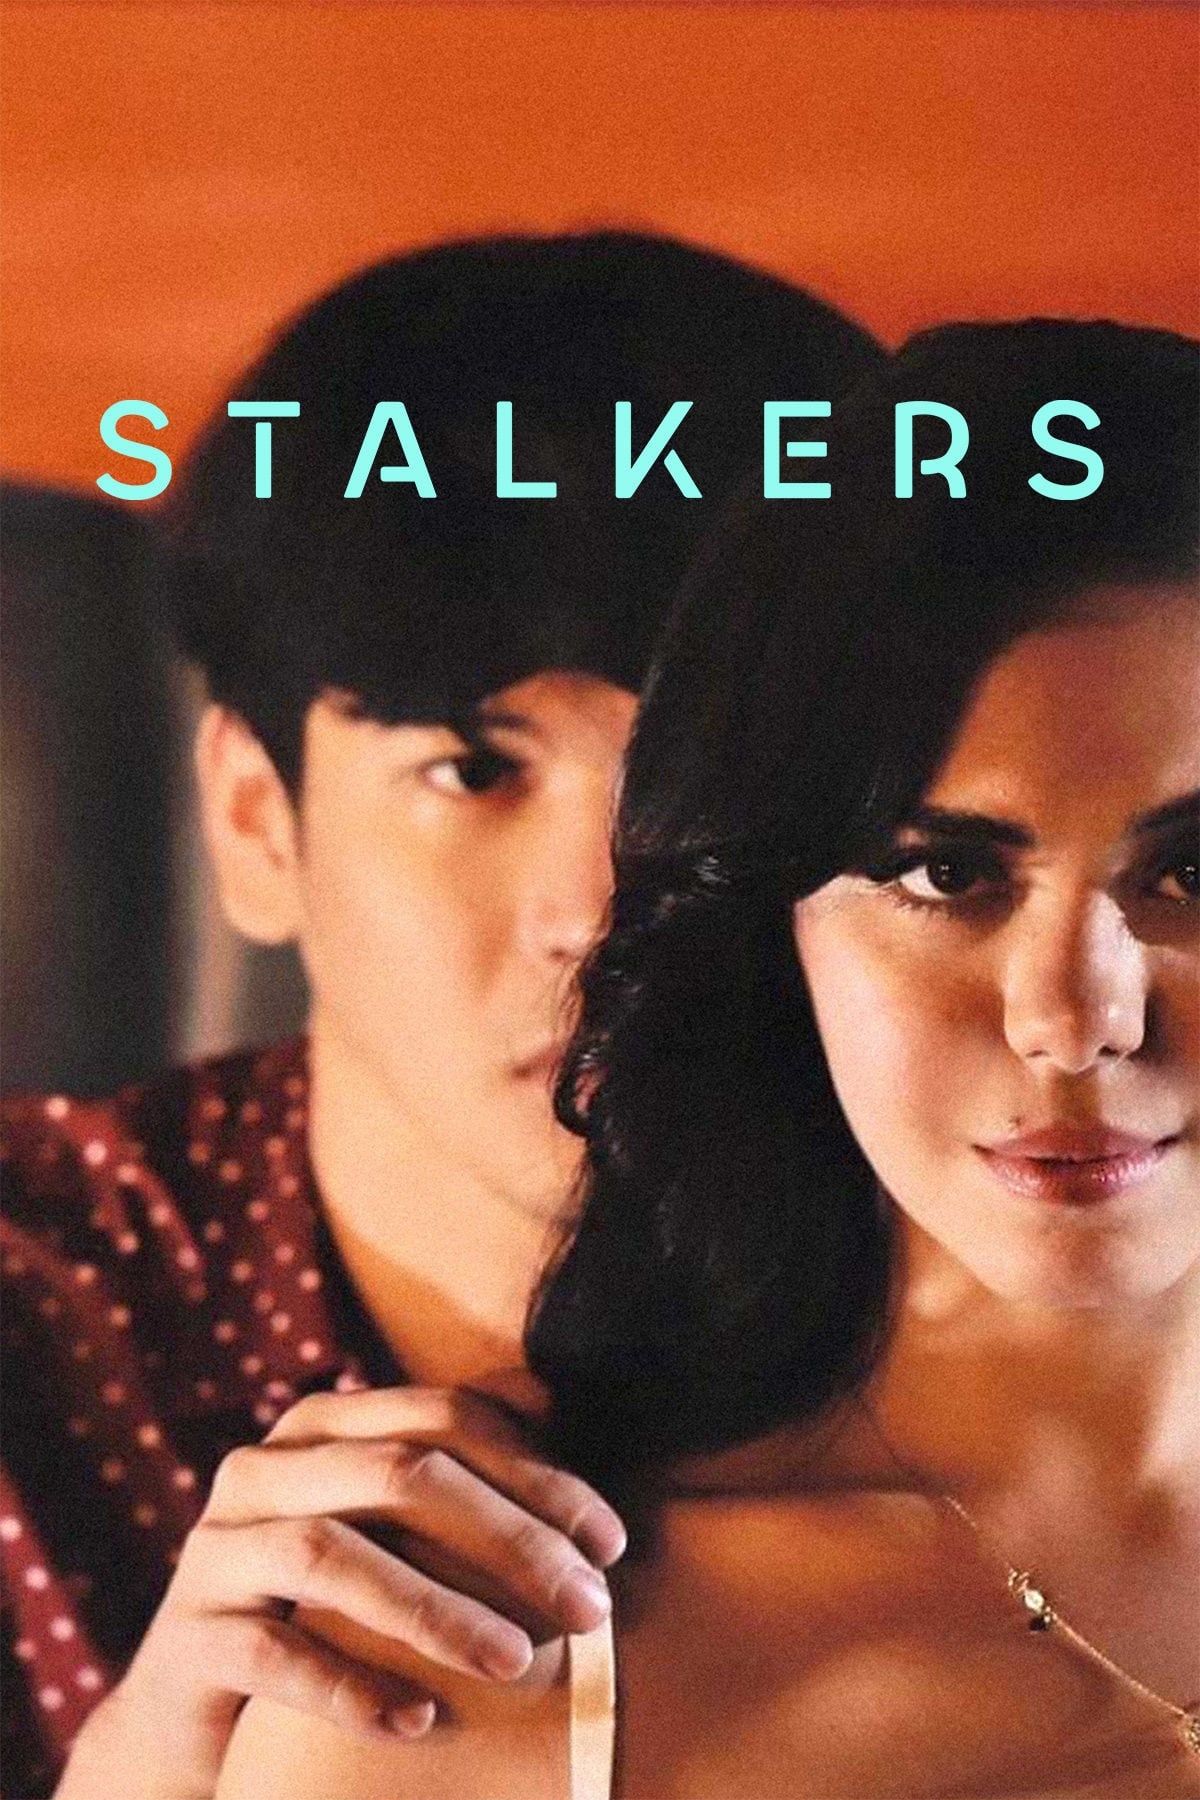 [18+] Stalkers (2023) S01E04 VMax Web Series HDRip download full movie